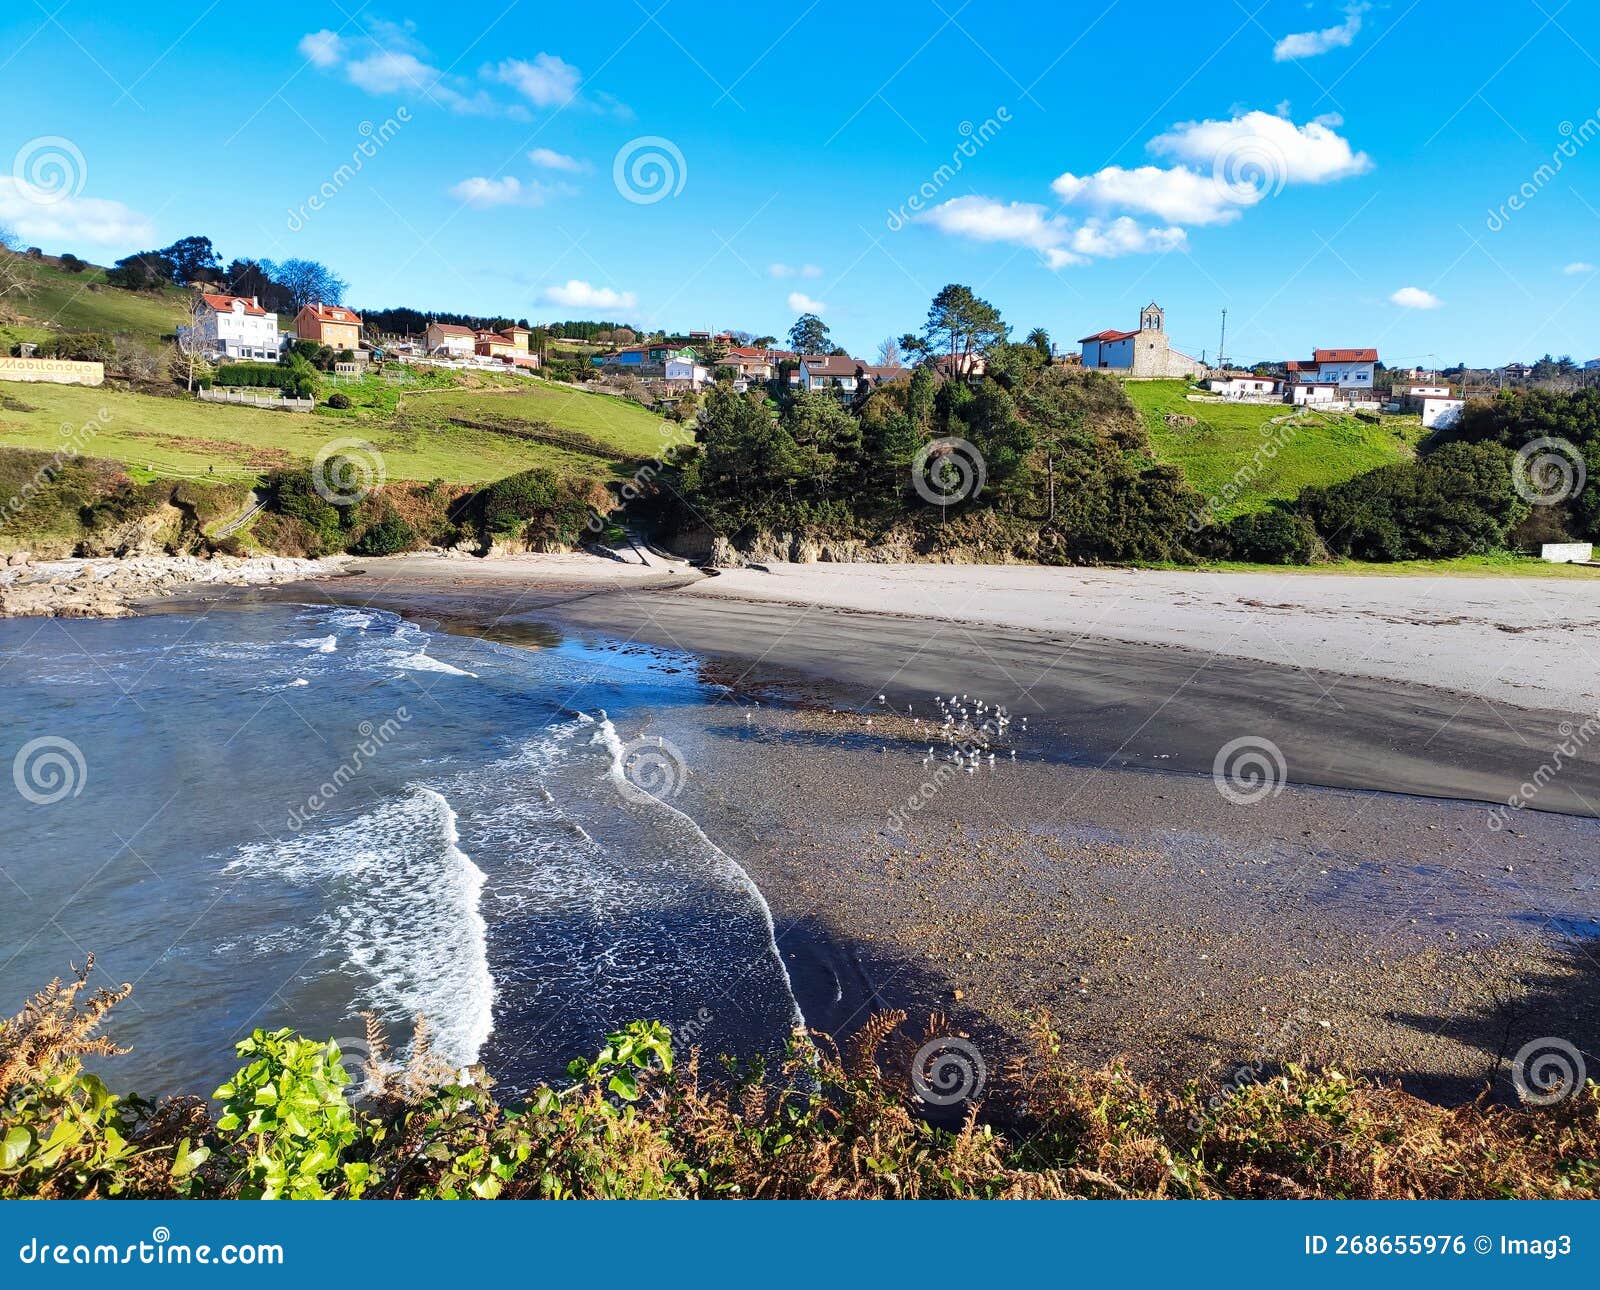 santa maria del mar beach and village, catrillon municipality, asturias, spain